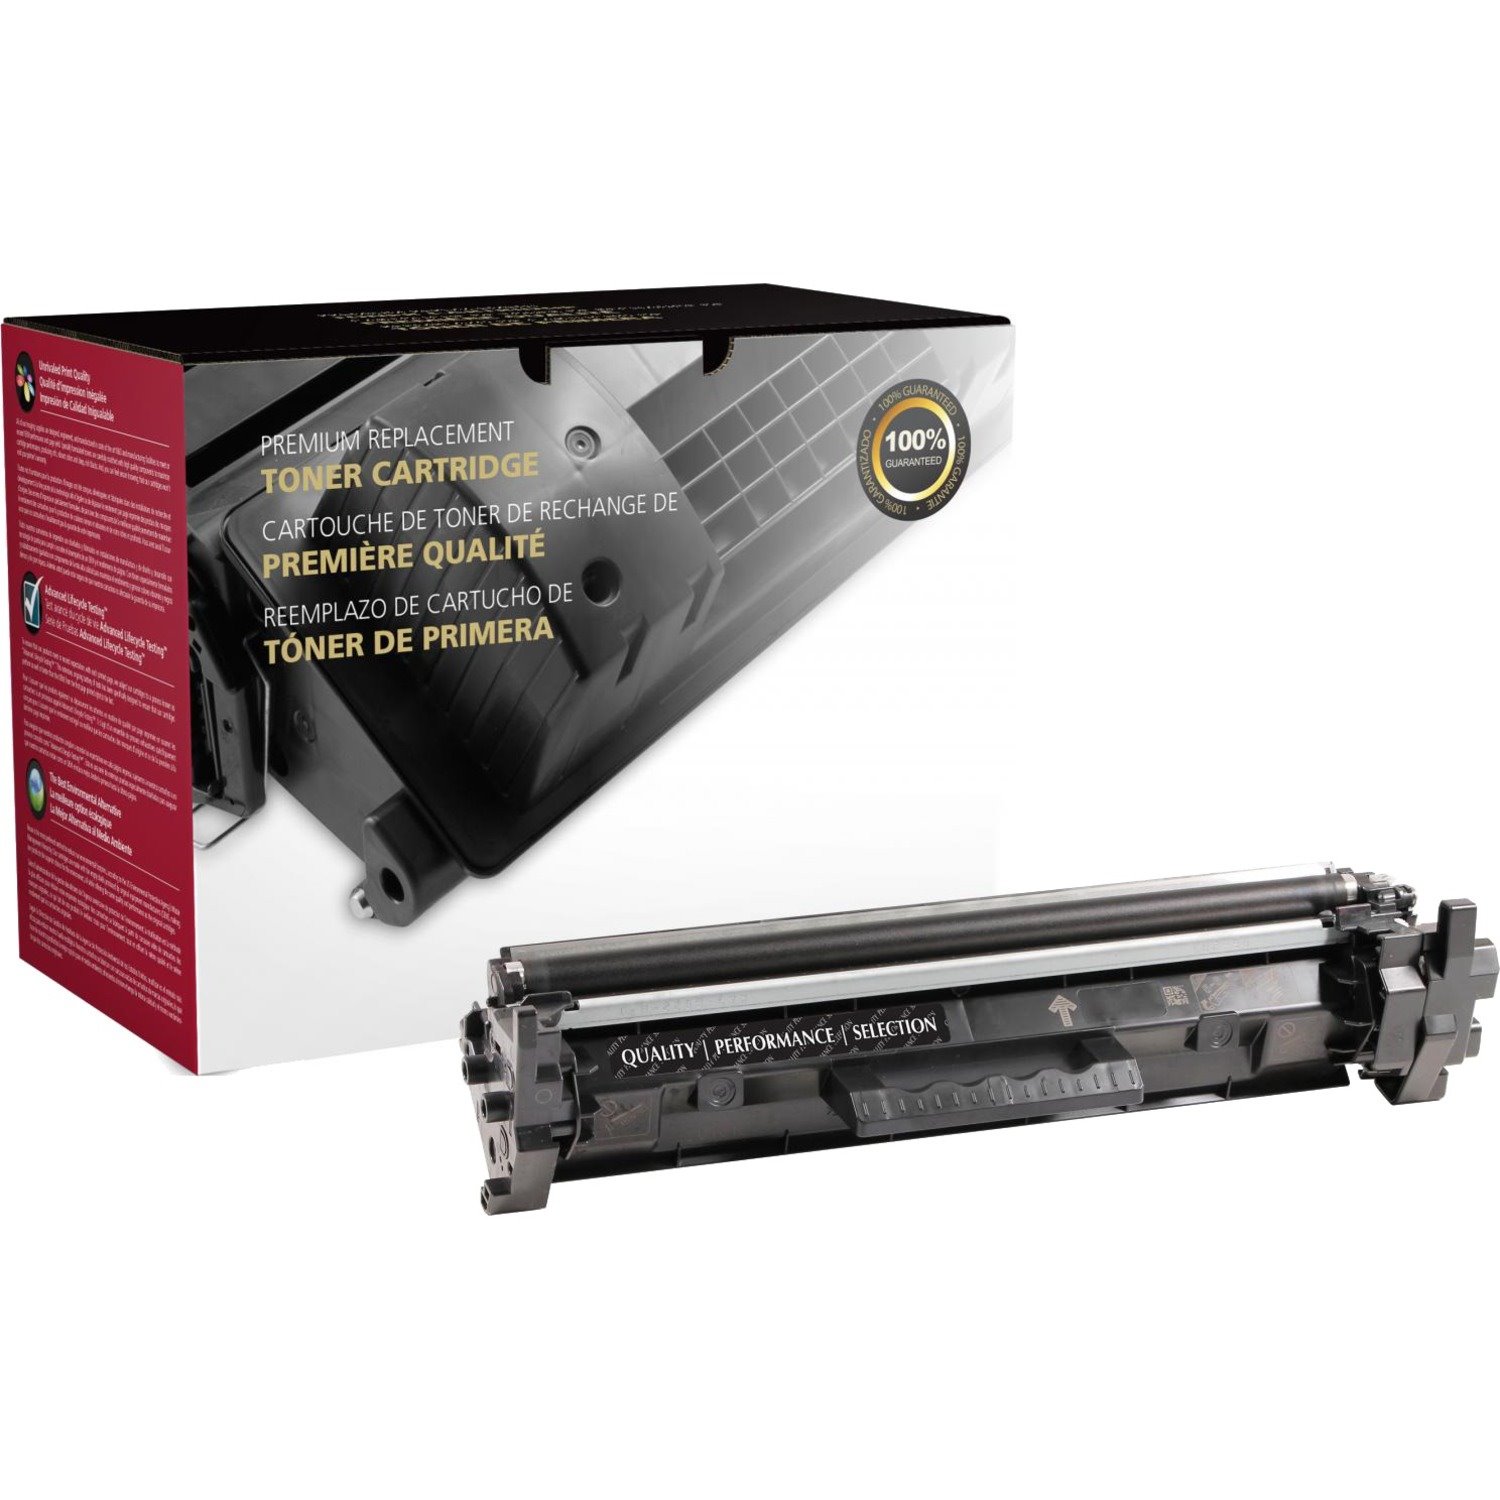 Clover Technologies Remanufactured Toner Cartridge - Alternative for HP 30A - Black